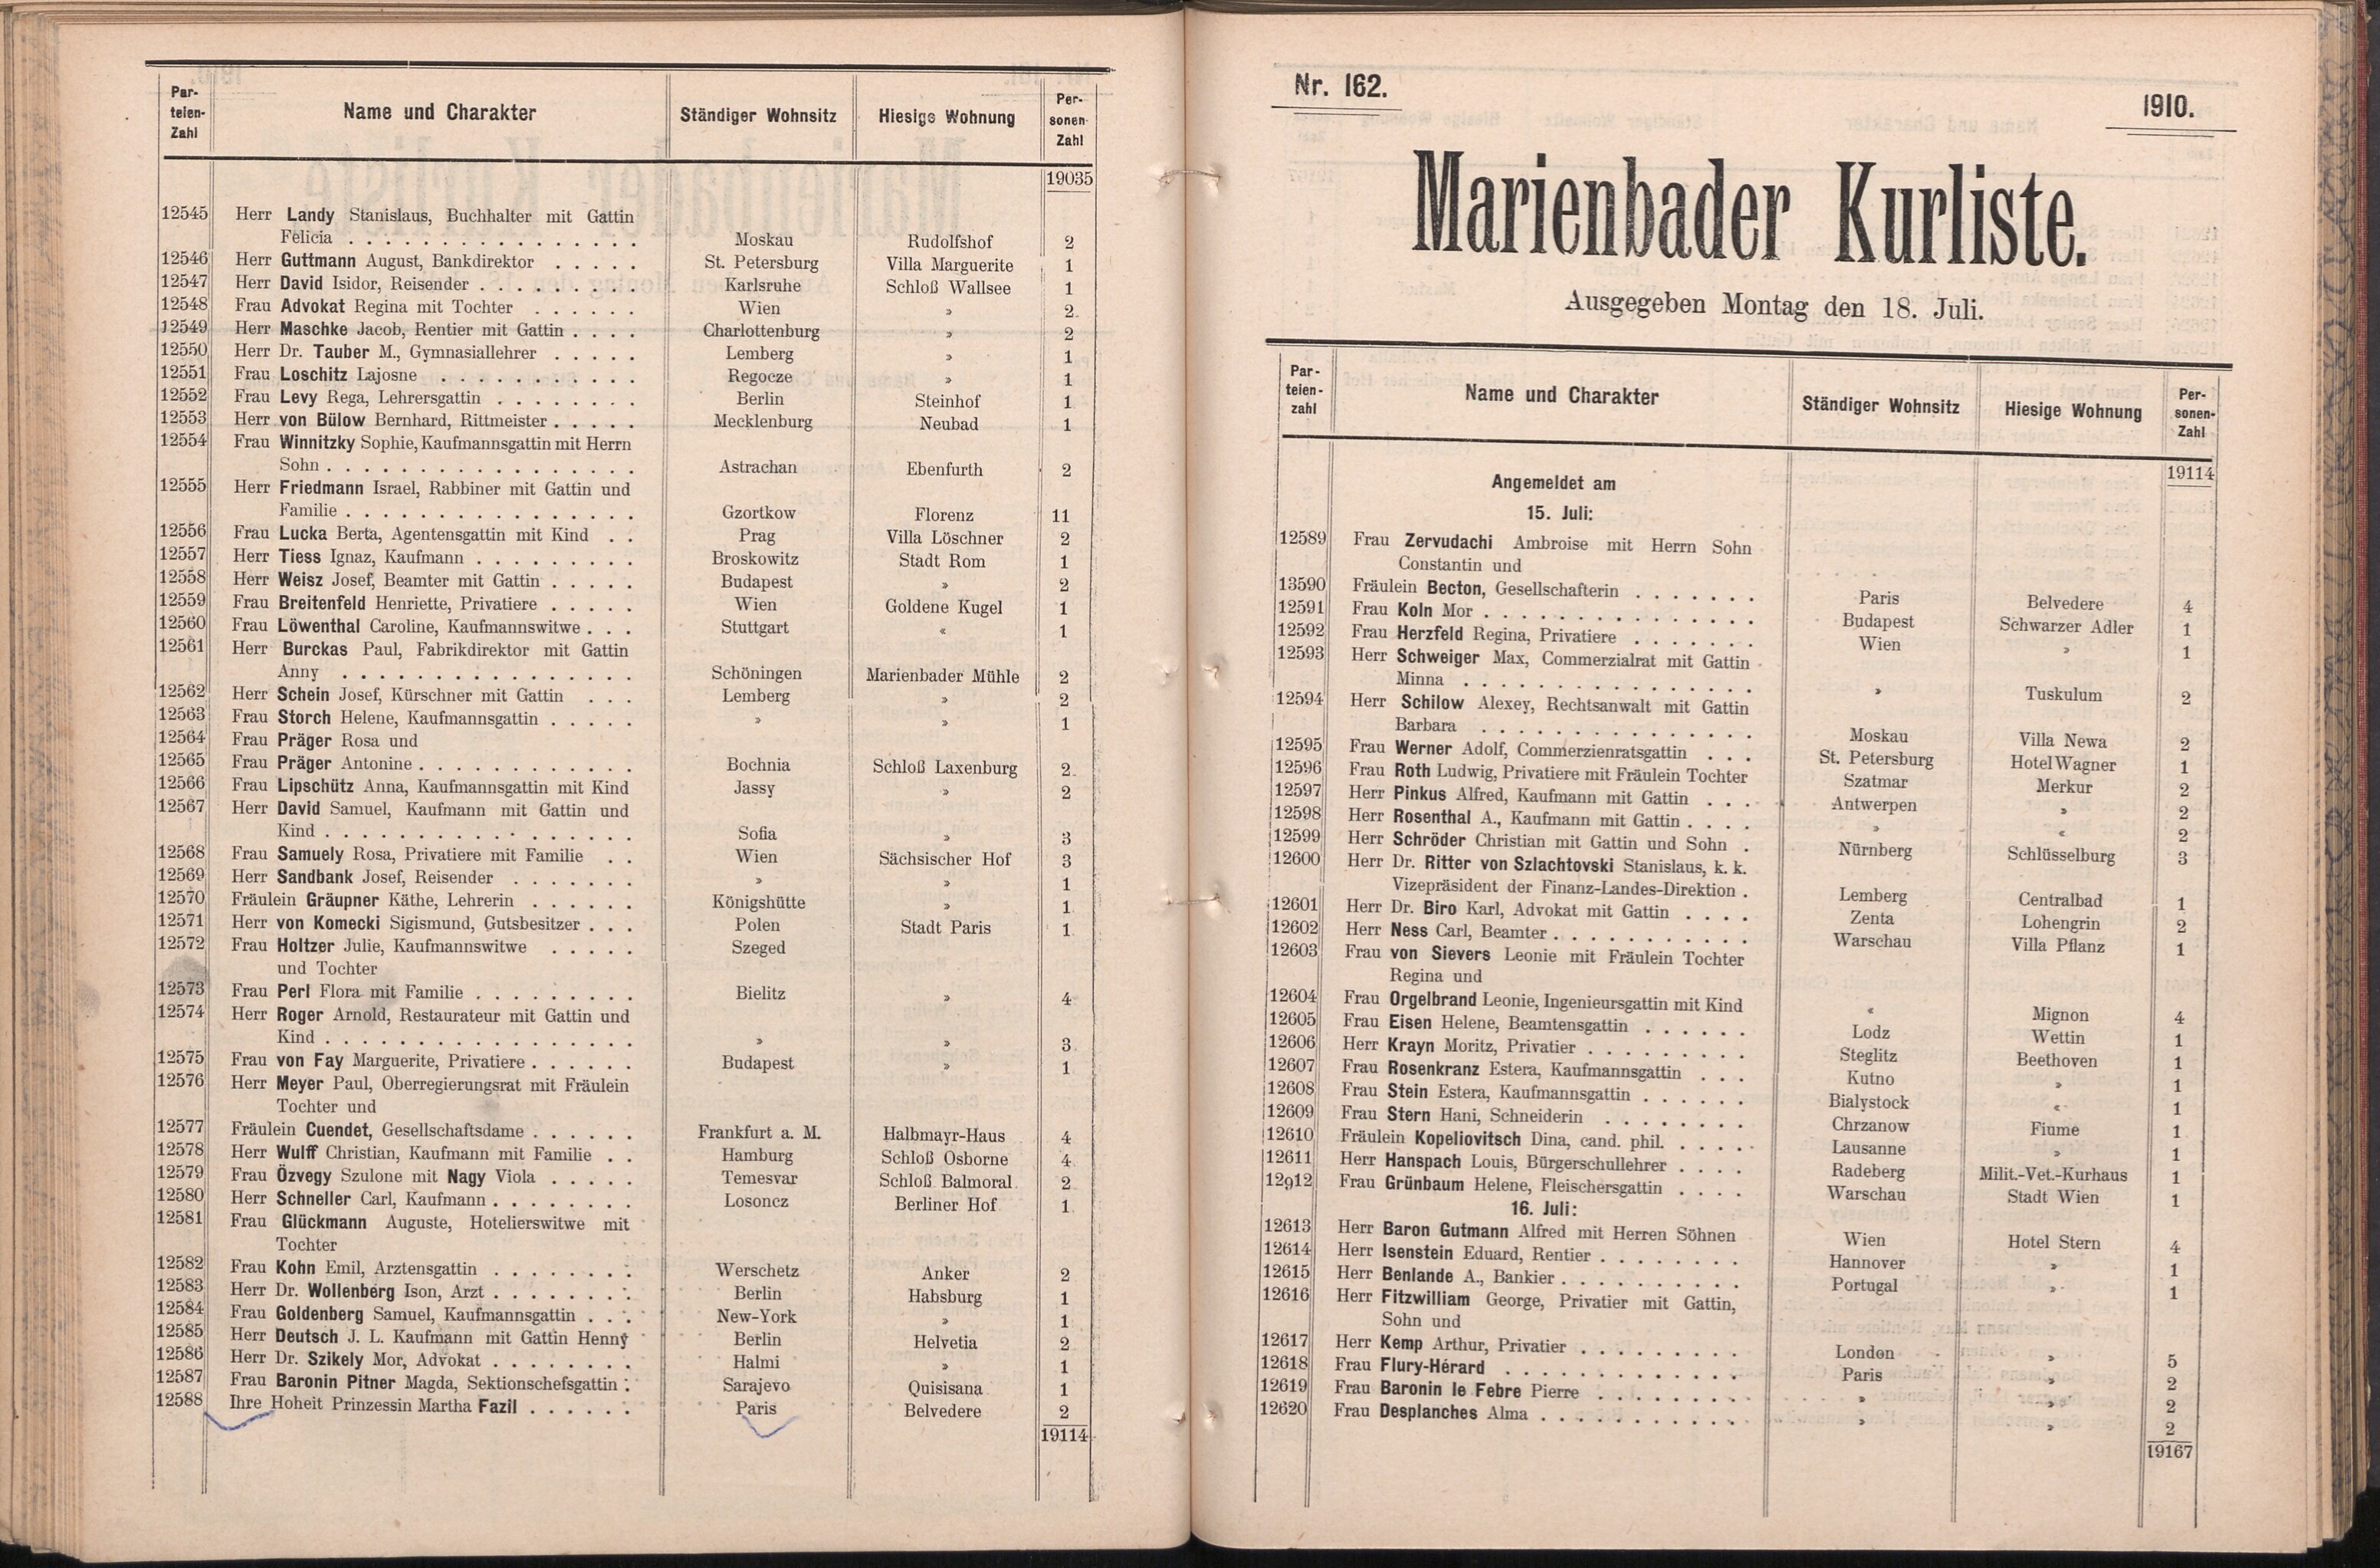 280. soap-ch_knihovna_marienbader-kurliste-1910_2800